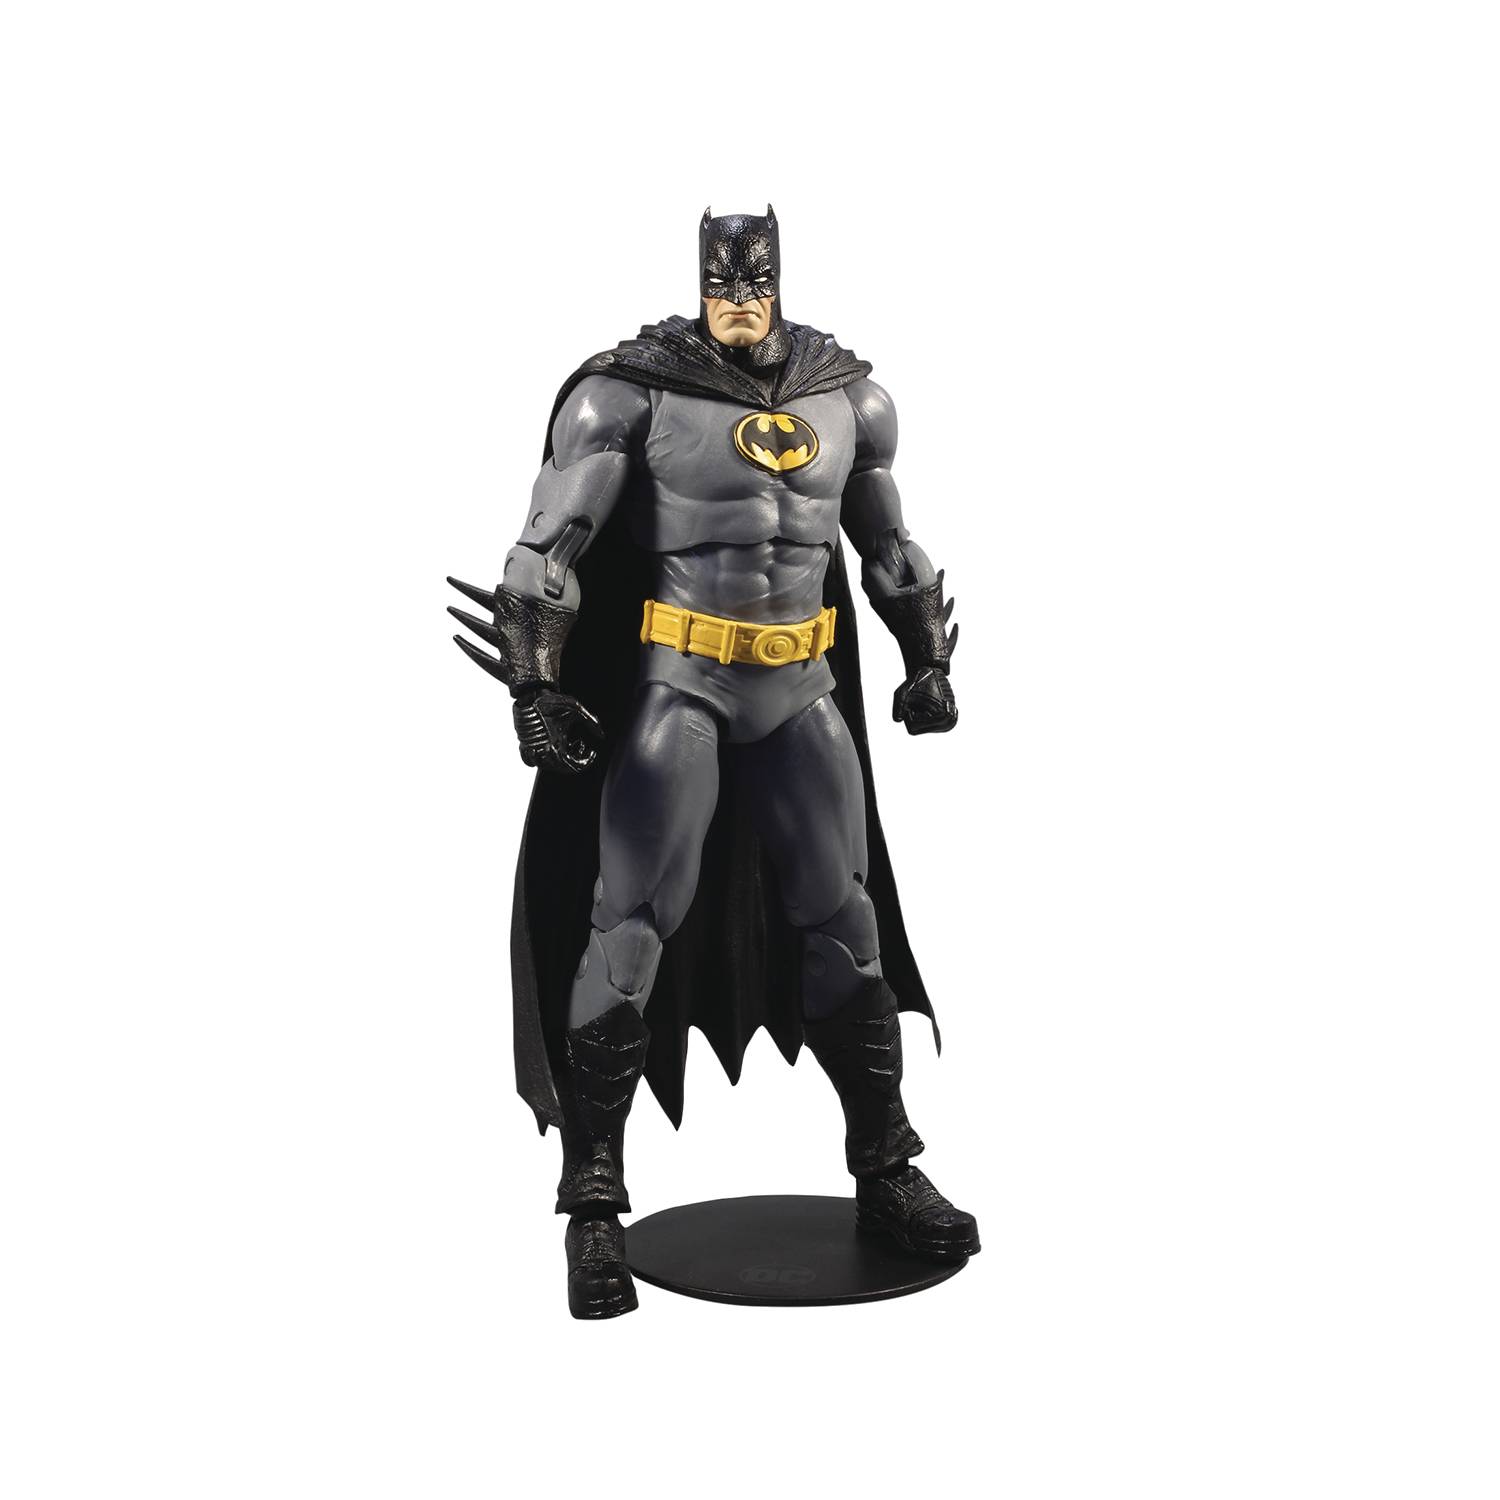 DC Essentials Essentially Dceased Deceased Batman Action Figure for sale online 